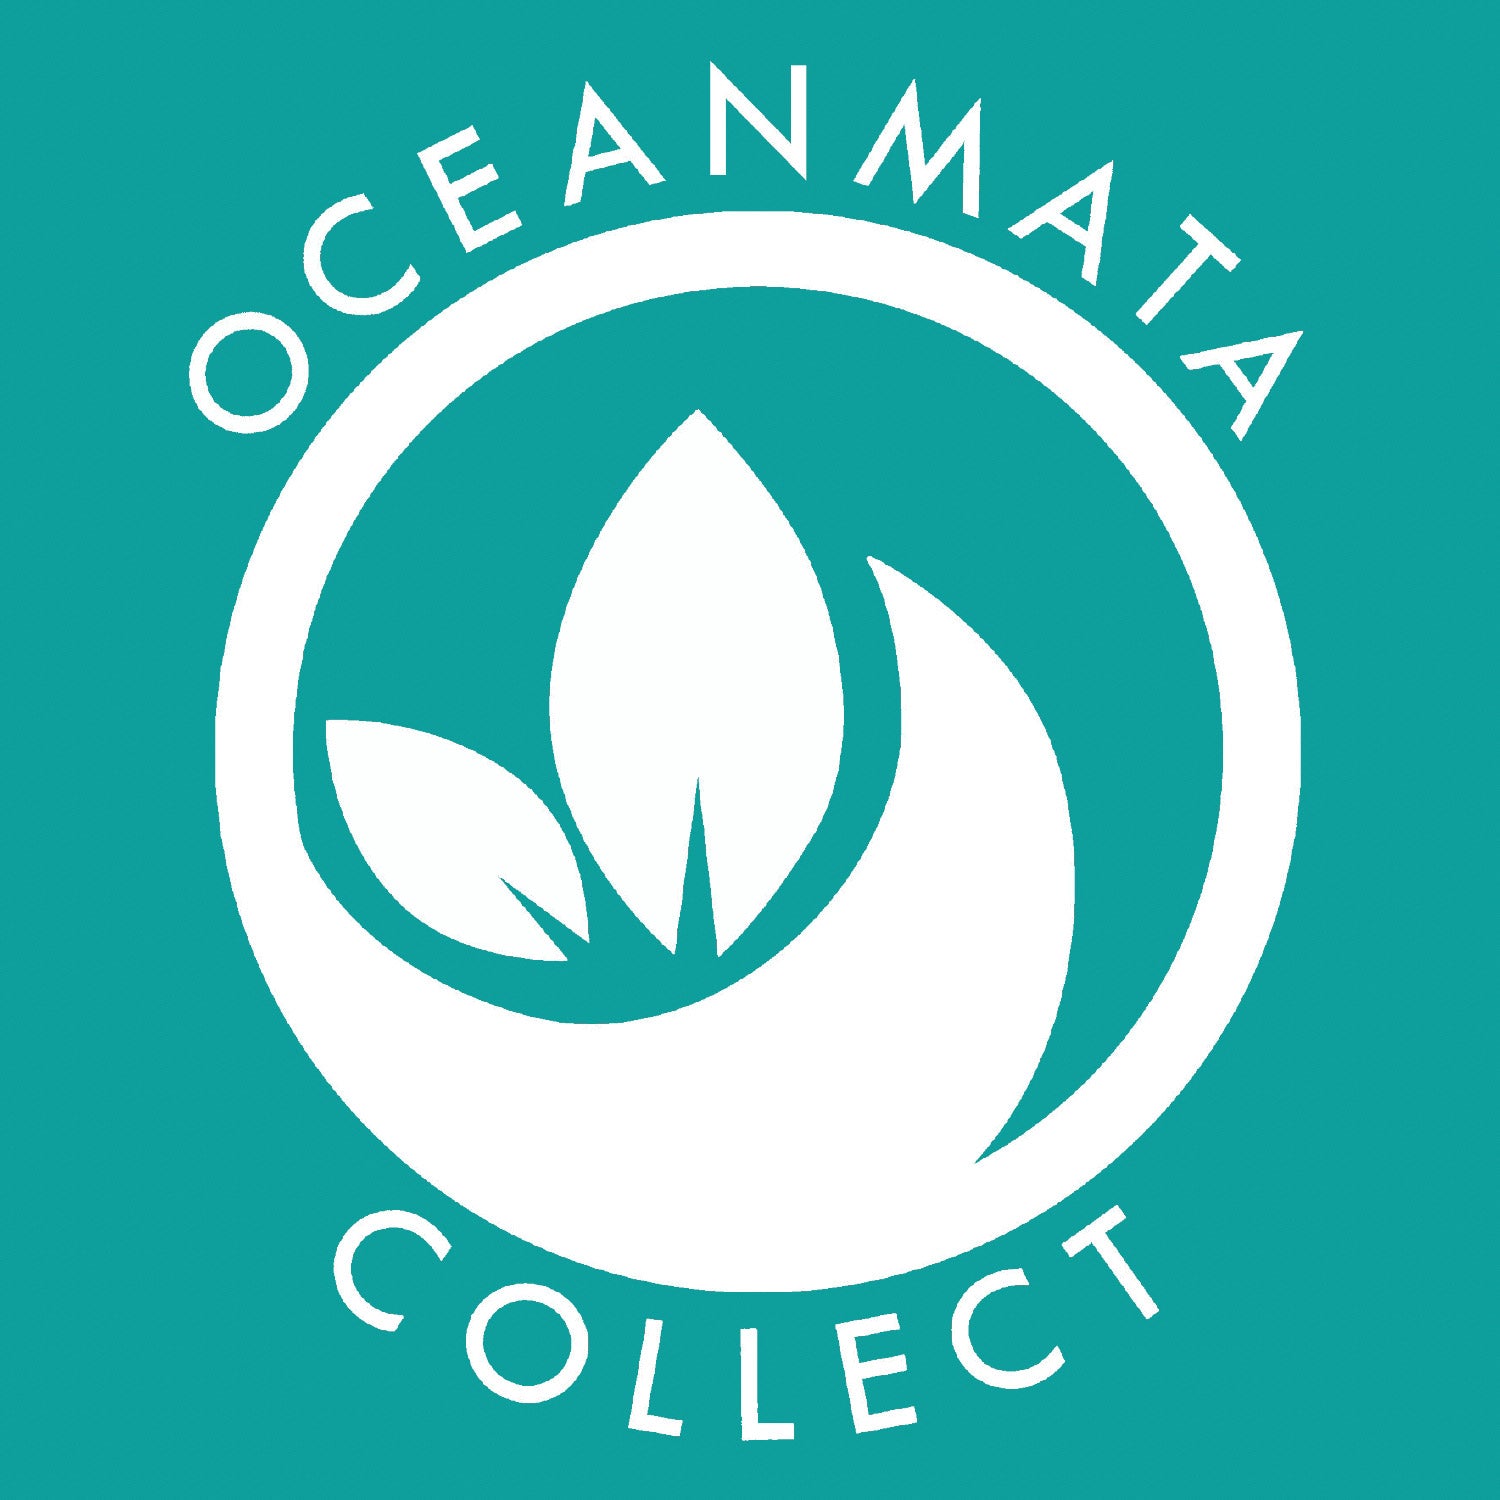 Oceanmata Collect Basis